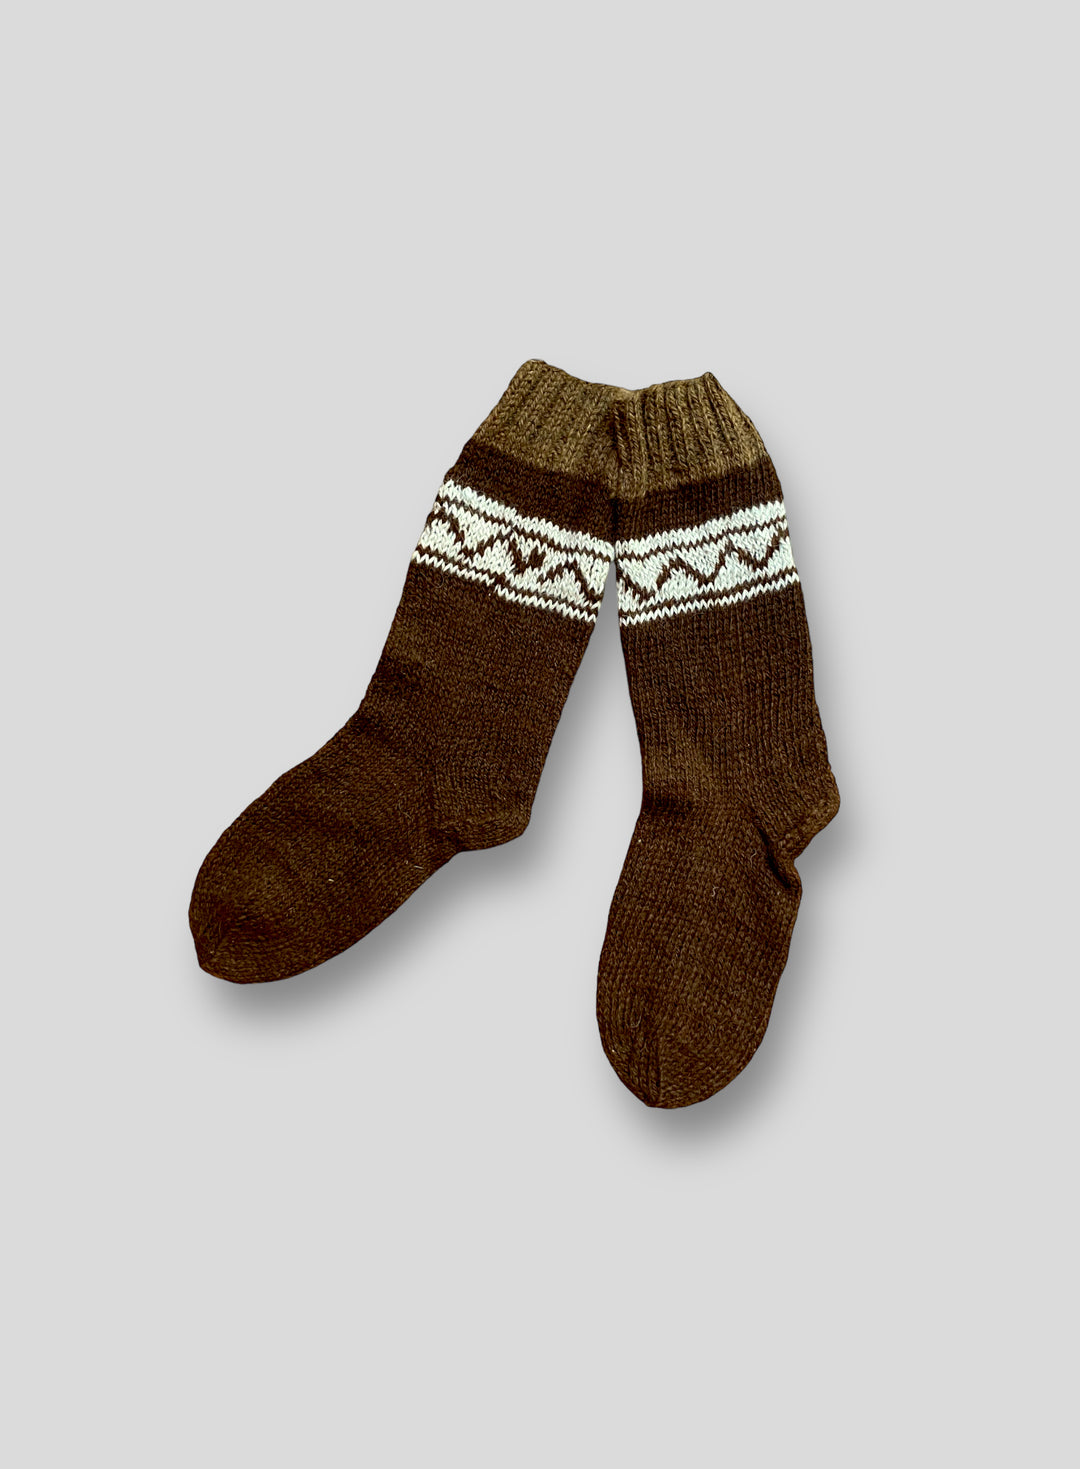 Hand-Knitted Llama Wool Socks